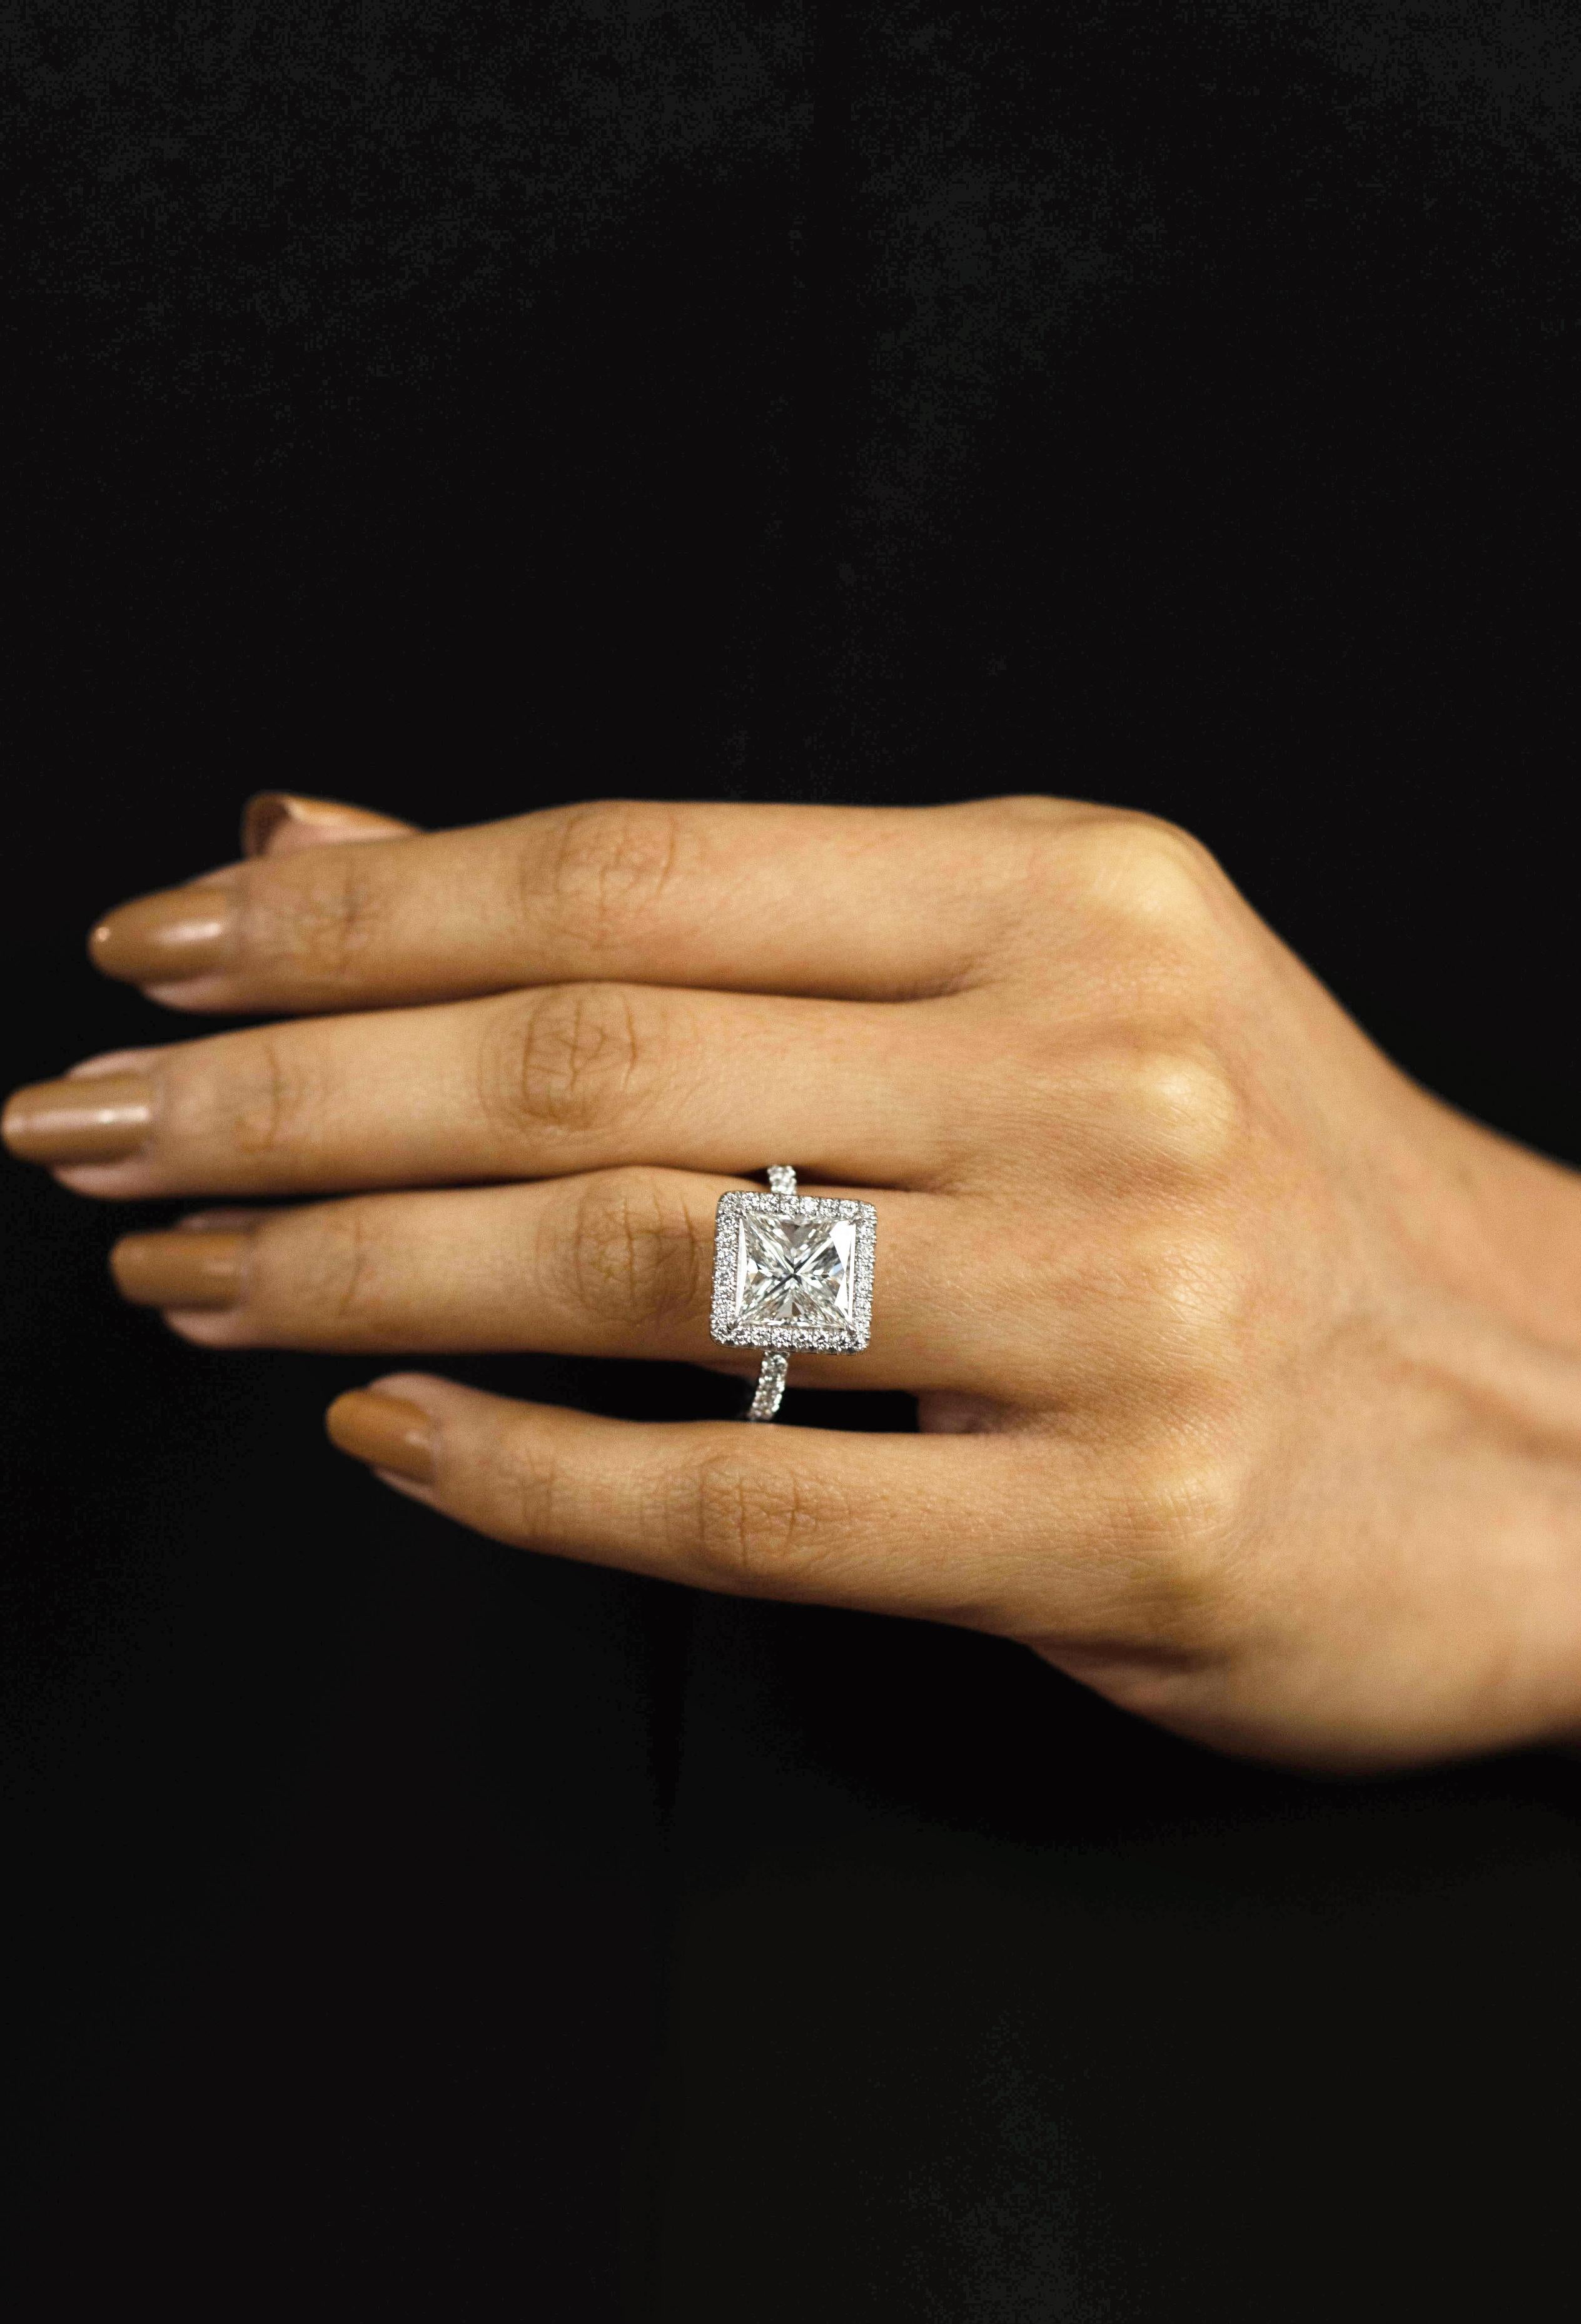 0.7 carat princess cut diamond ring